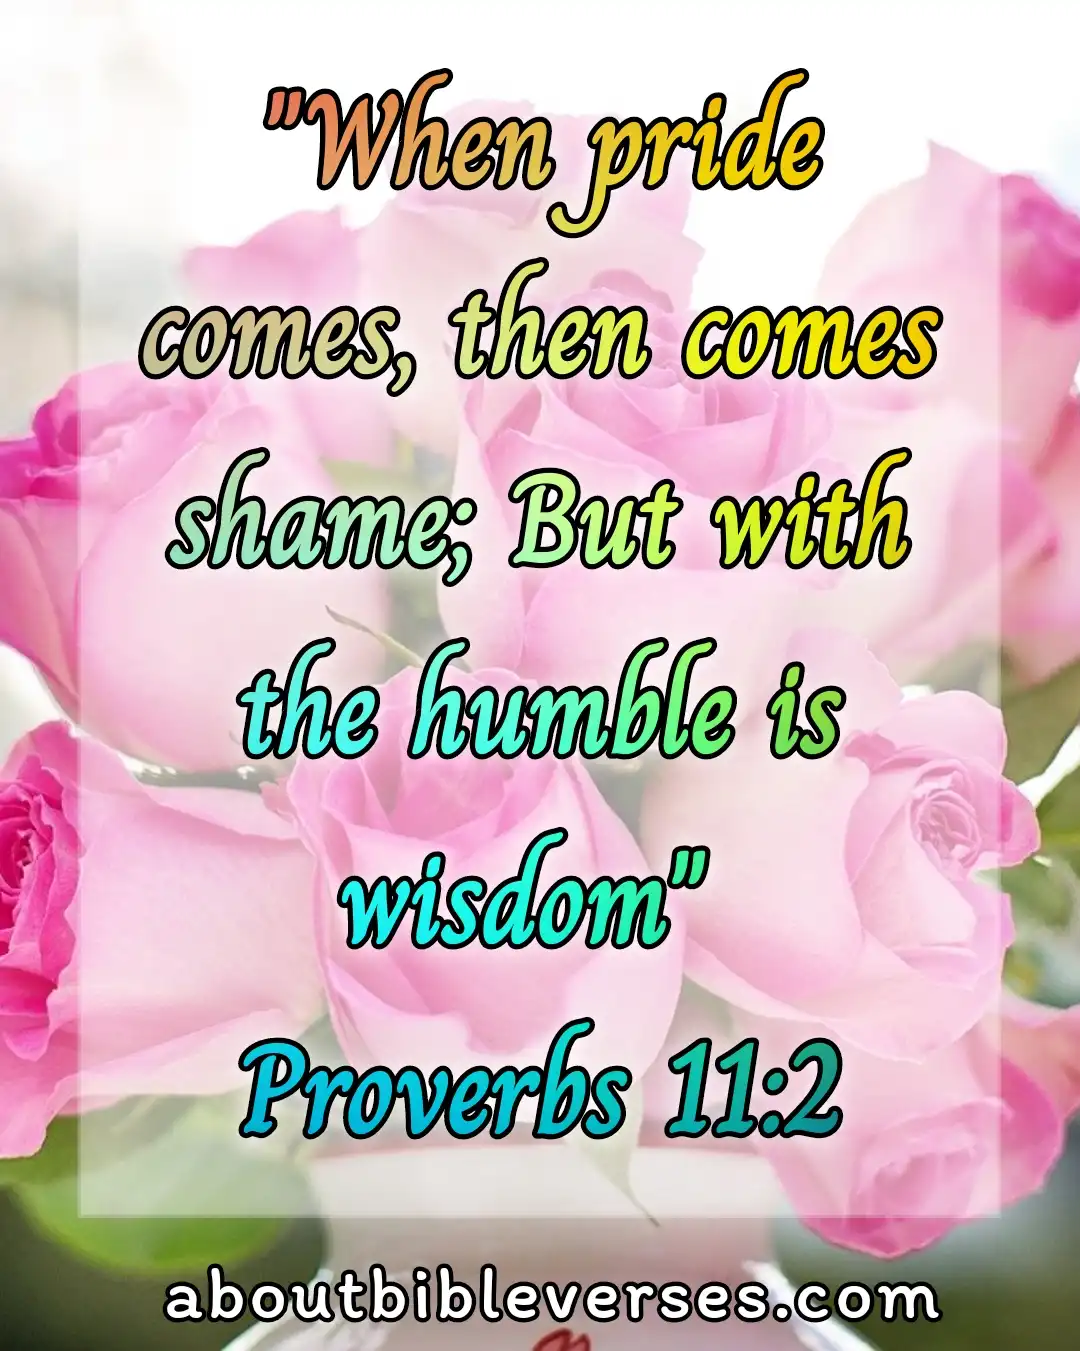 Today Bible Verse (Proverbs 11:2)